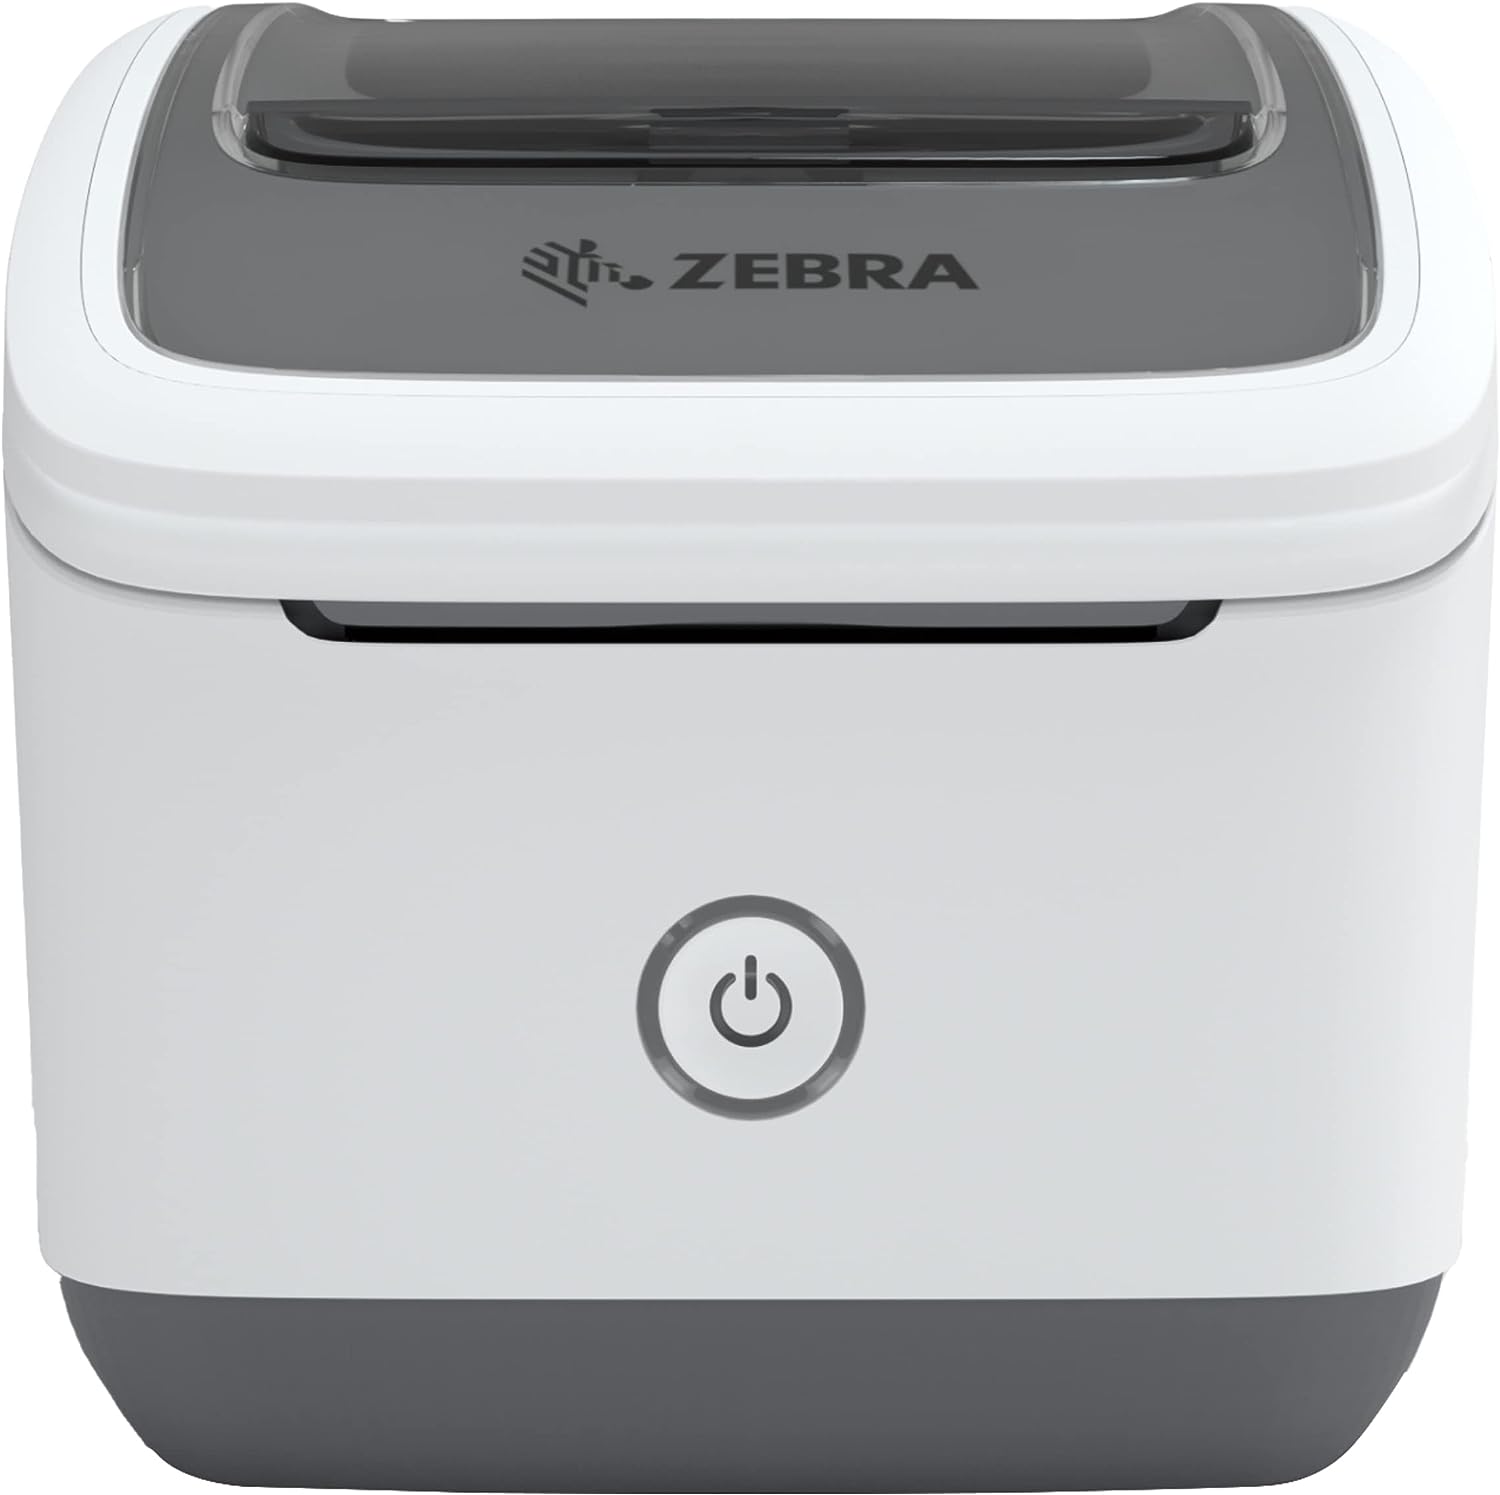 ZEBRA ZSB Series Thermal Label Printer - Small Home [...]